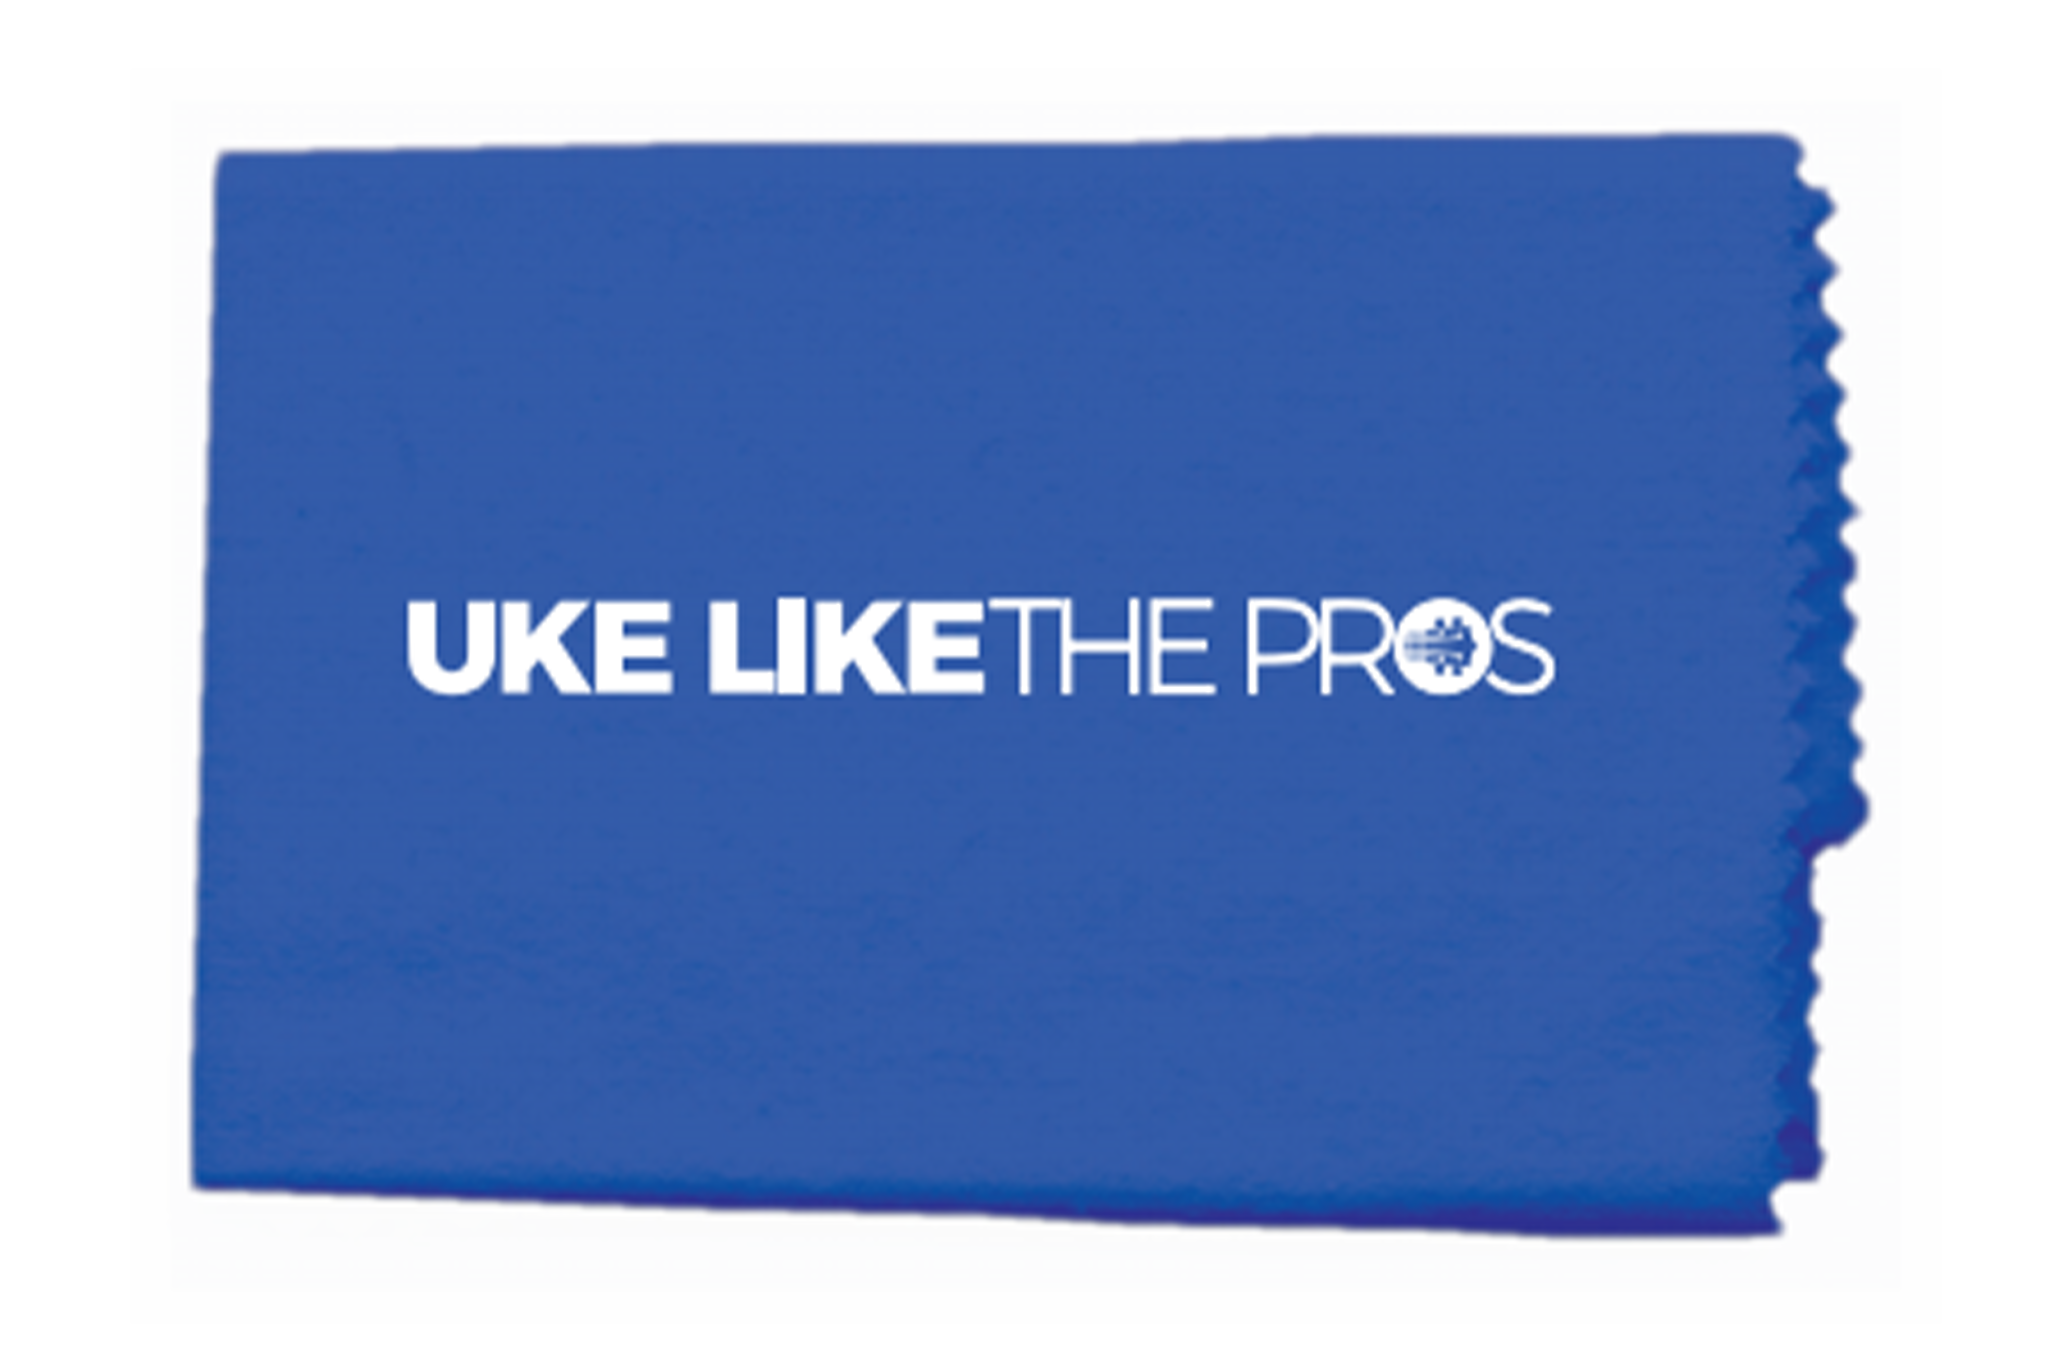 Uke Like The Pros Suede Micro Fiber Polish Cloth - AMAZING!!!